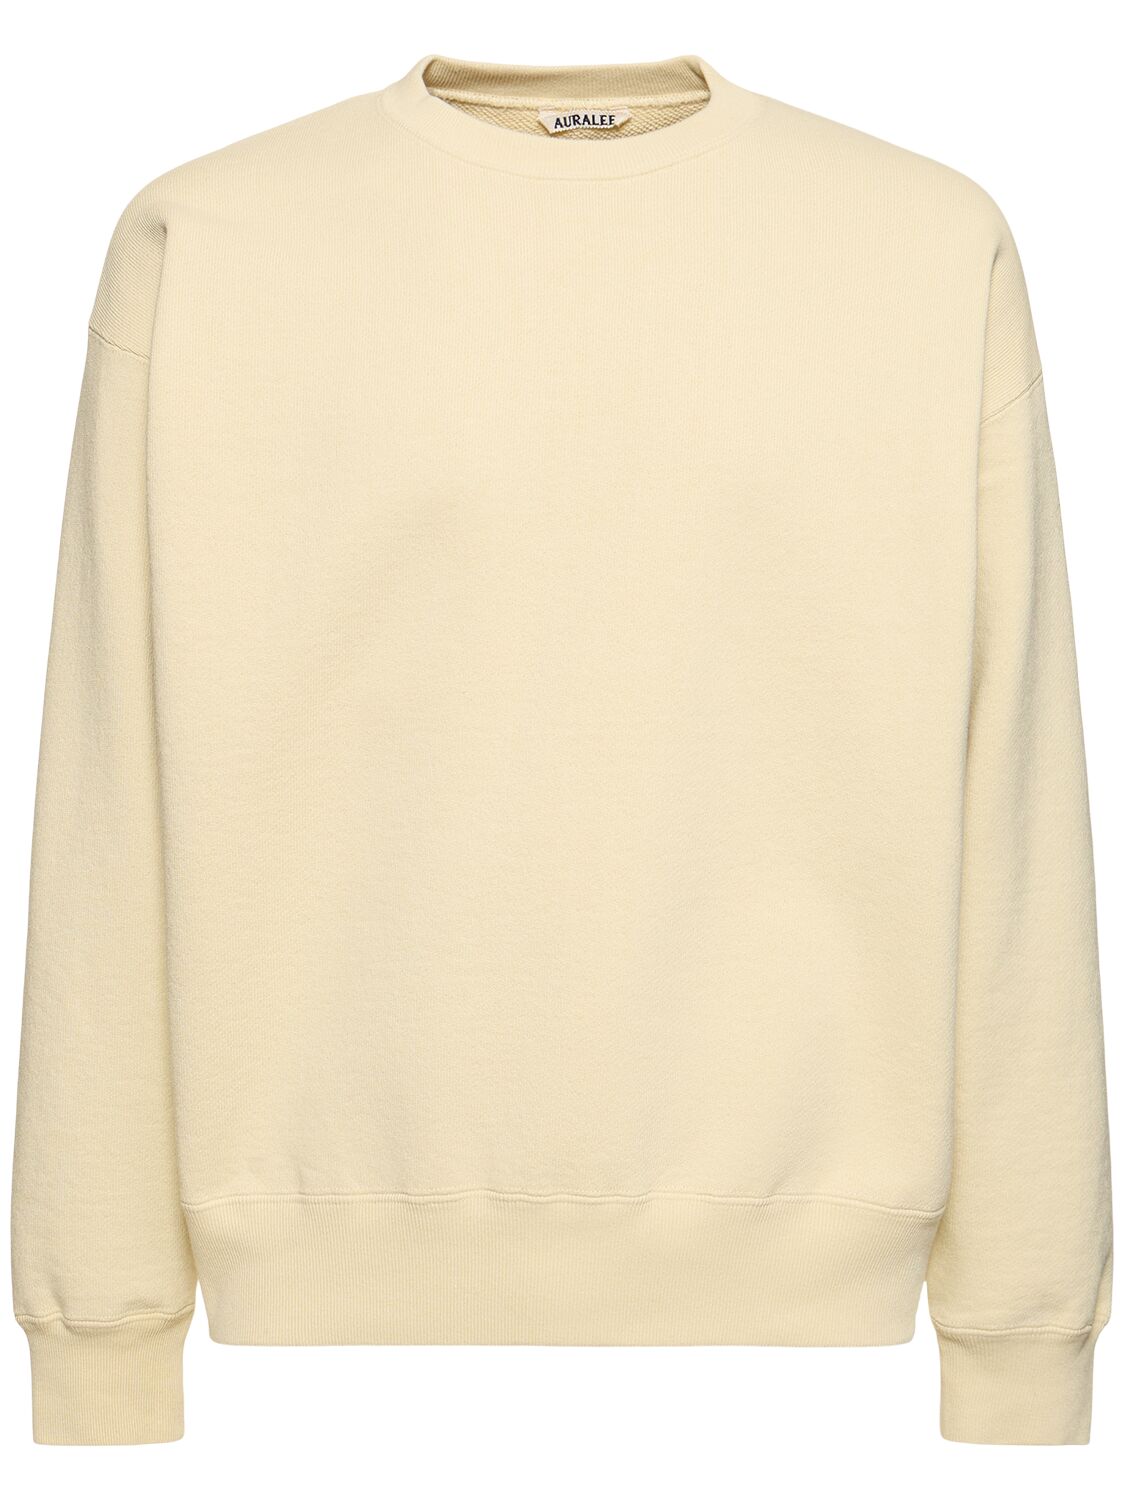 Auralee Cotton Knit Sweatshirt In Light Yellow